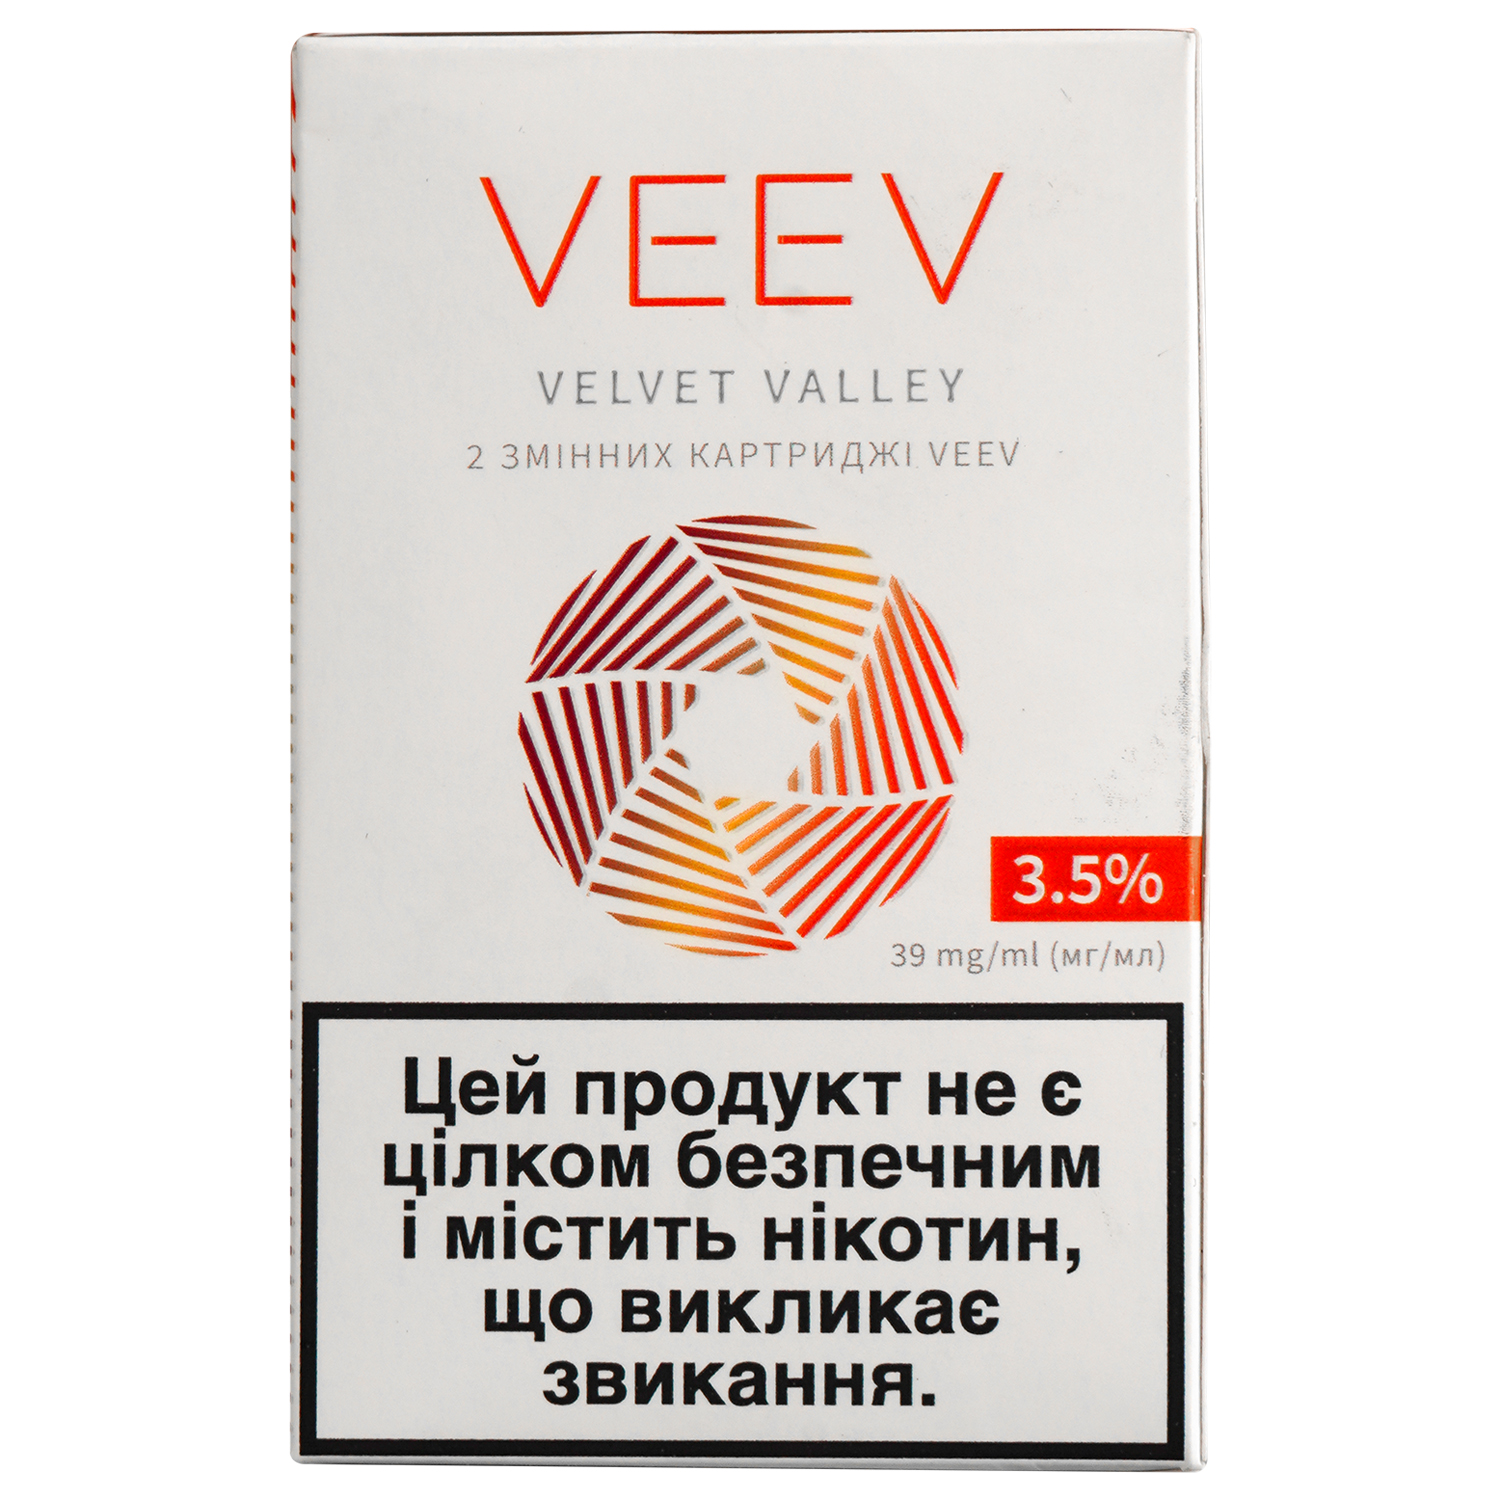 Картридж для POD систем Veev Velvet Valley, 3,5%, 2 шт. - фото 1